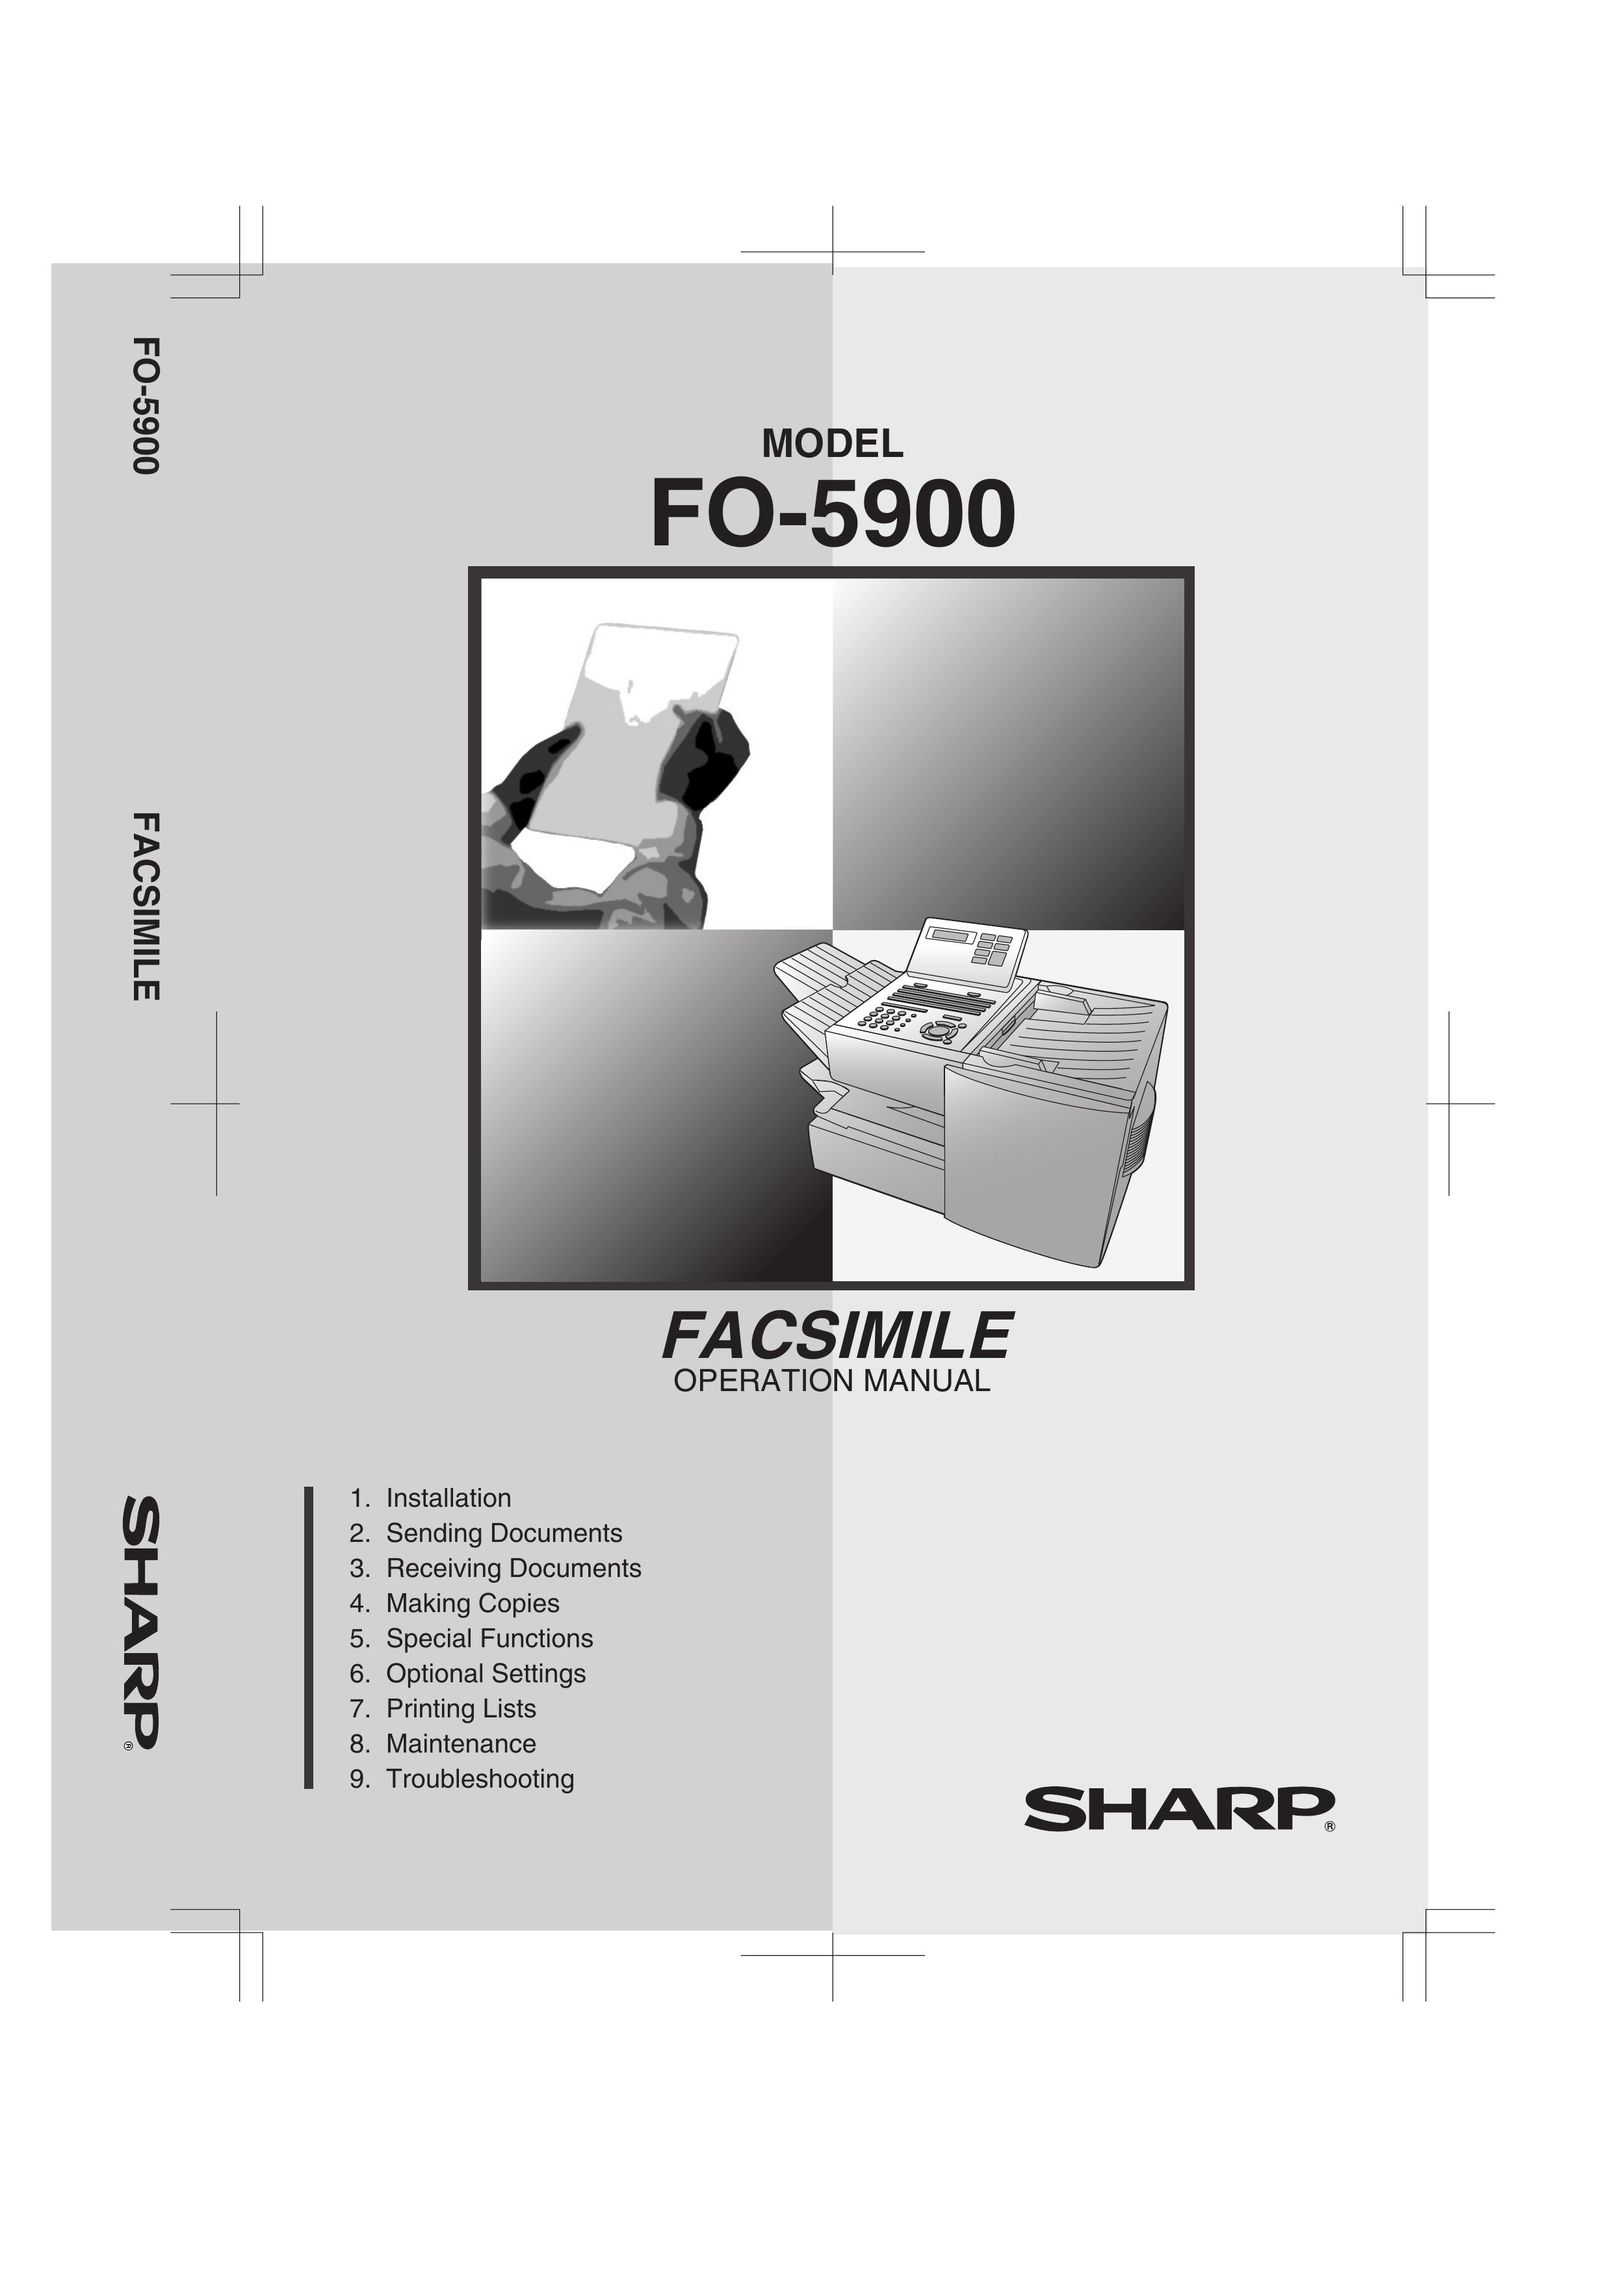 Sharp FO-5900 Fax Machine User Manual